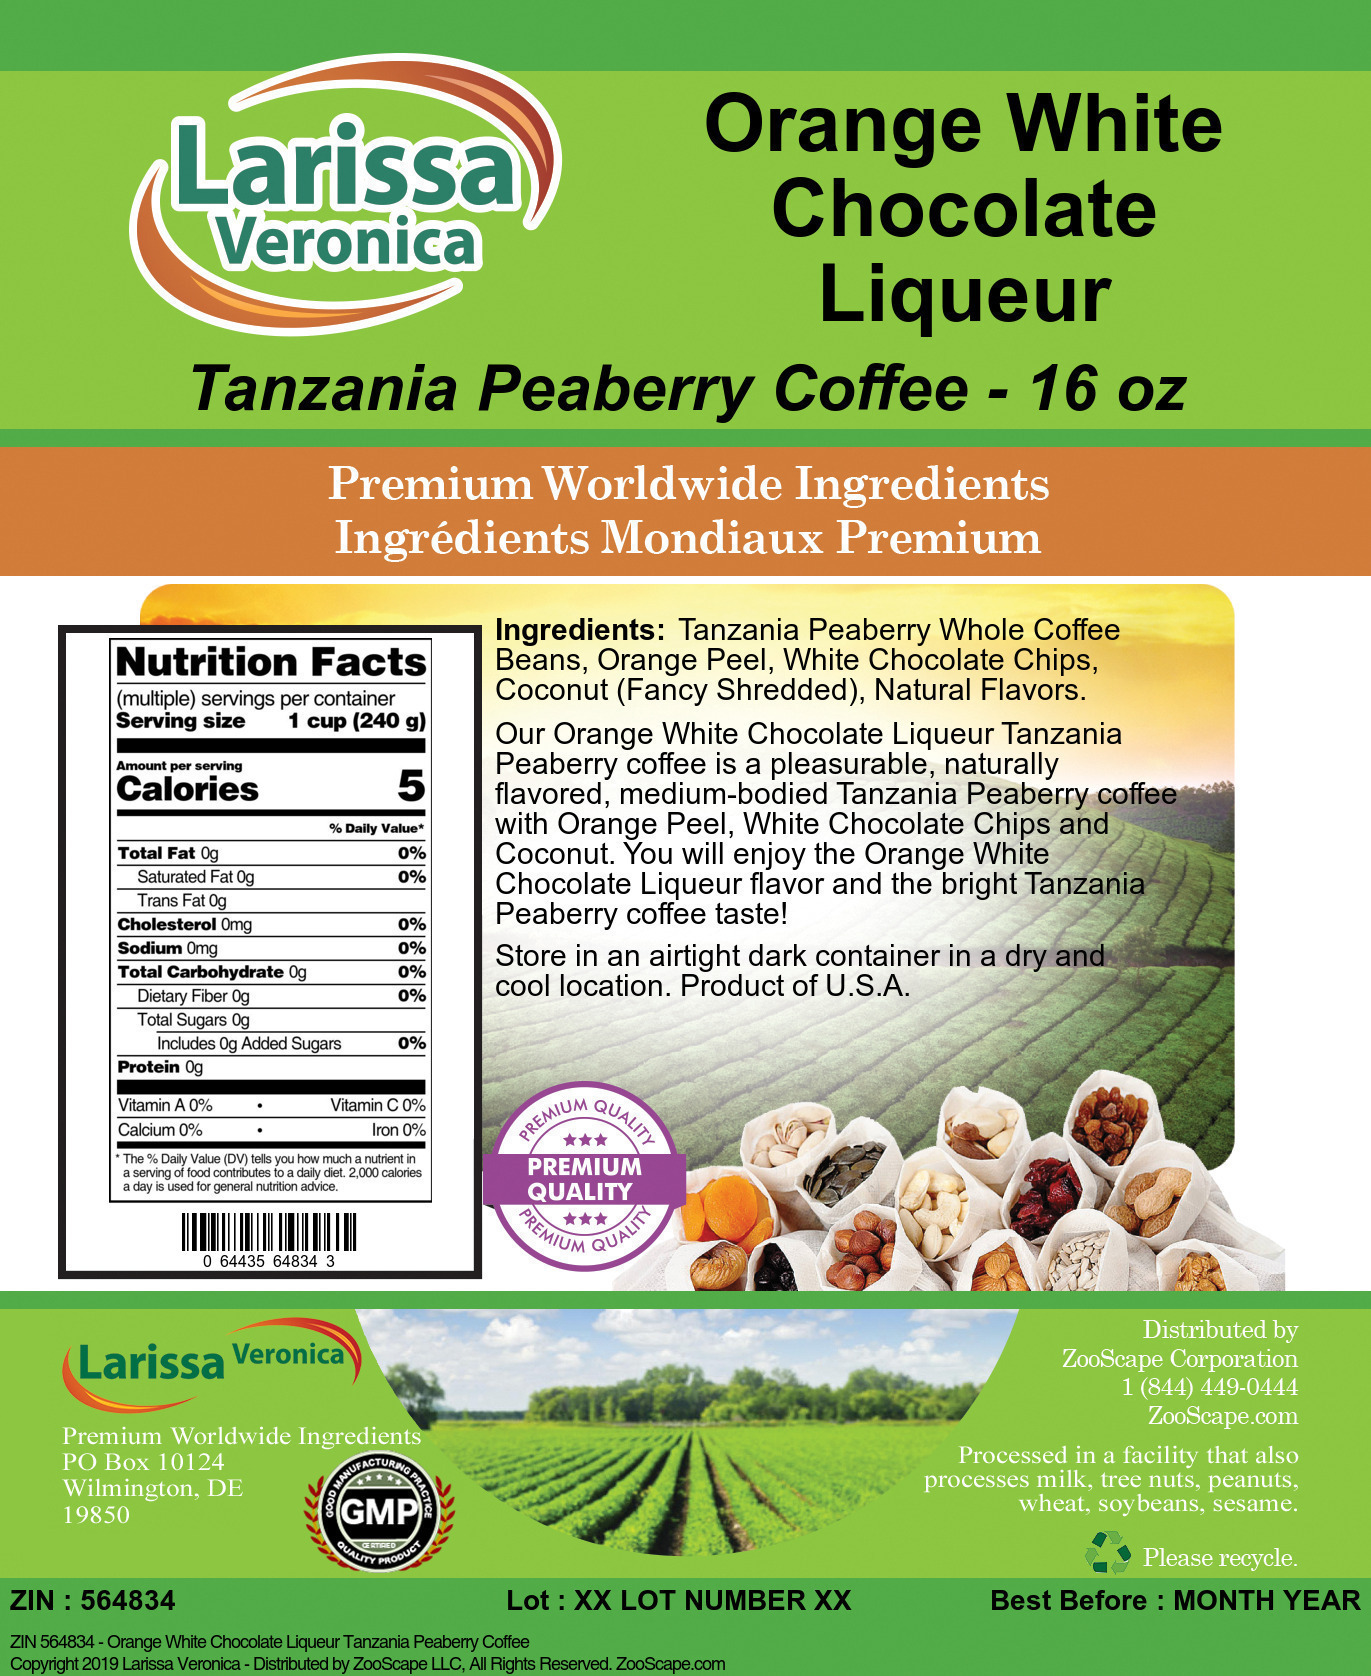 Orange White Chocolate Liqueur Tanzania Peaberry Coffee - Label